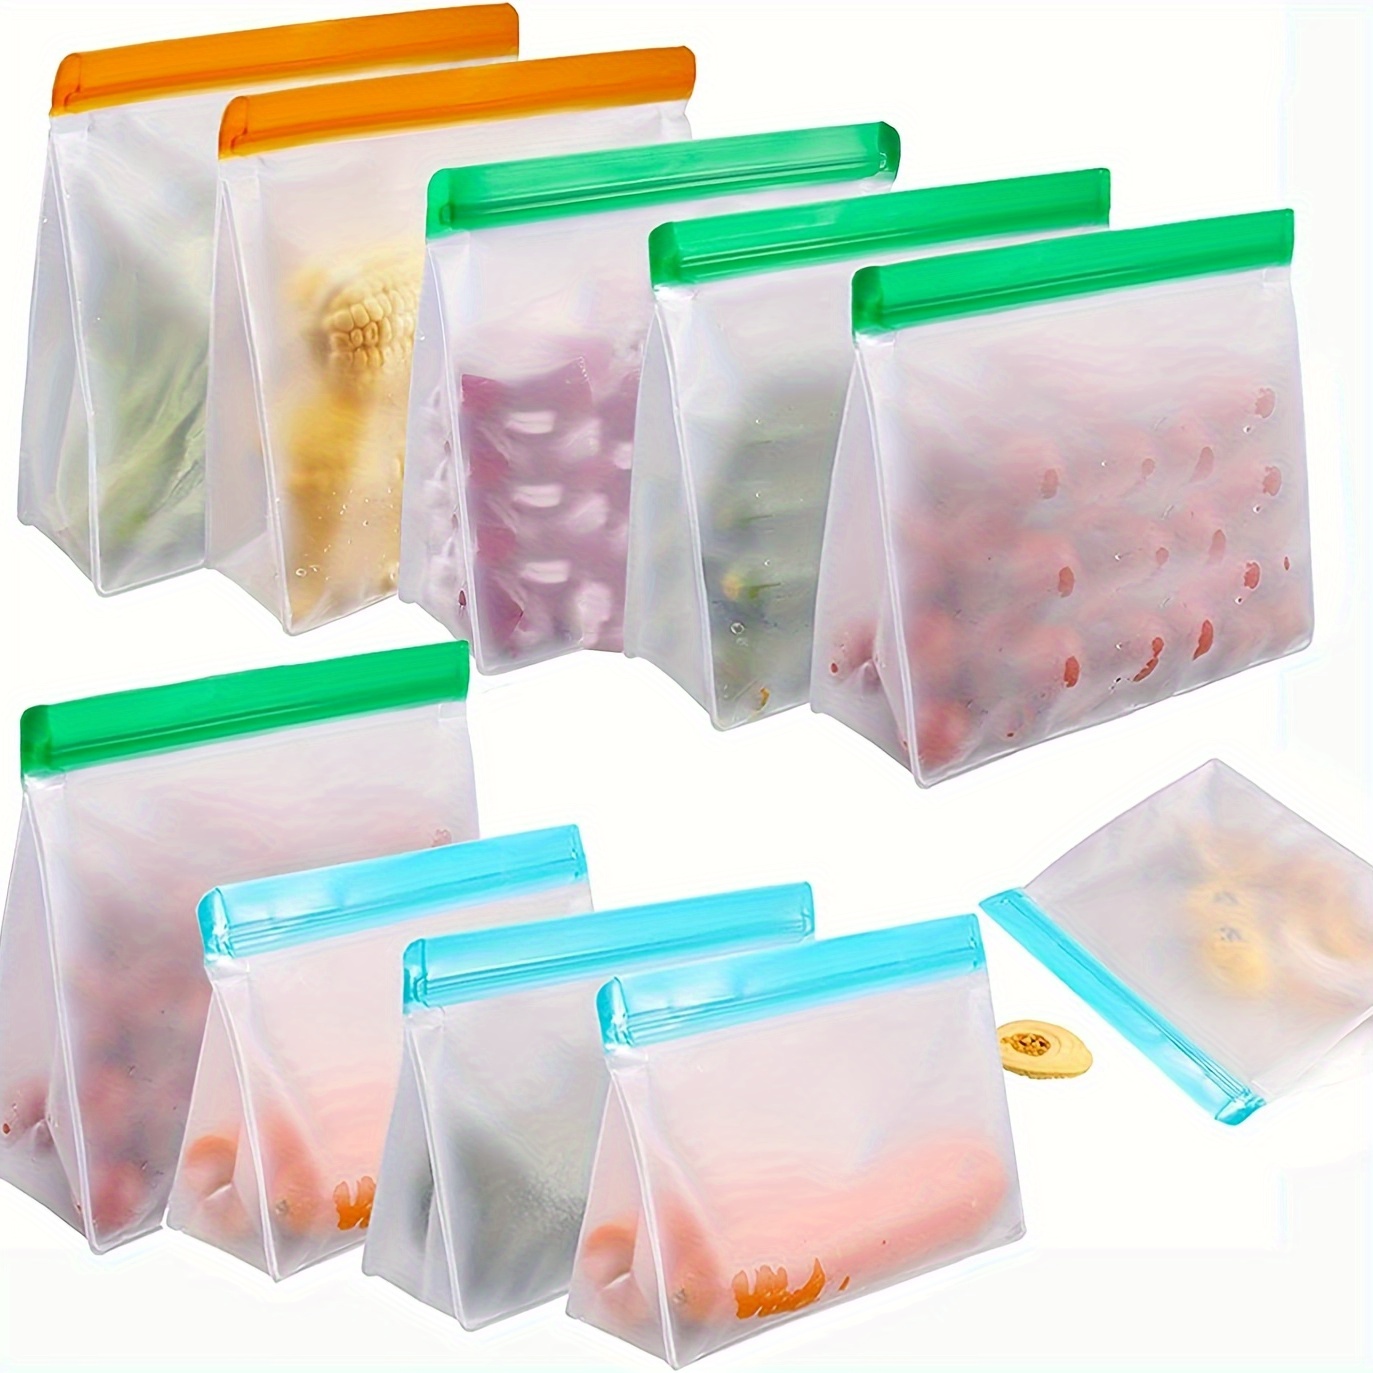 

Reusable Silicone Food Storage Bag, Leak Proof And Reusable Freezer Bag, Travel/home Storage Bag -1 Reusable Gallon Bag/1 Reusable Sandwich Bag/1 Reusable Snack Bag (excluding Bisphenol A)